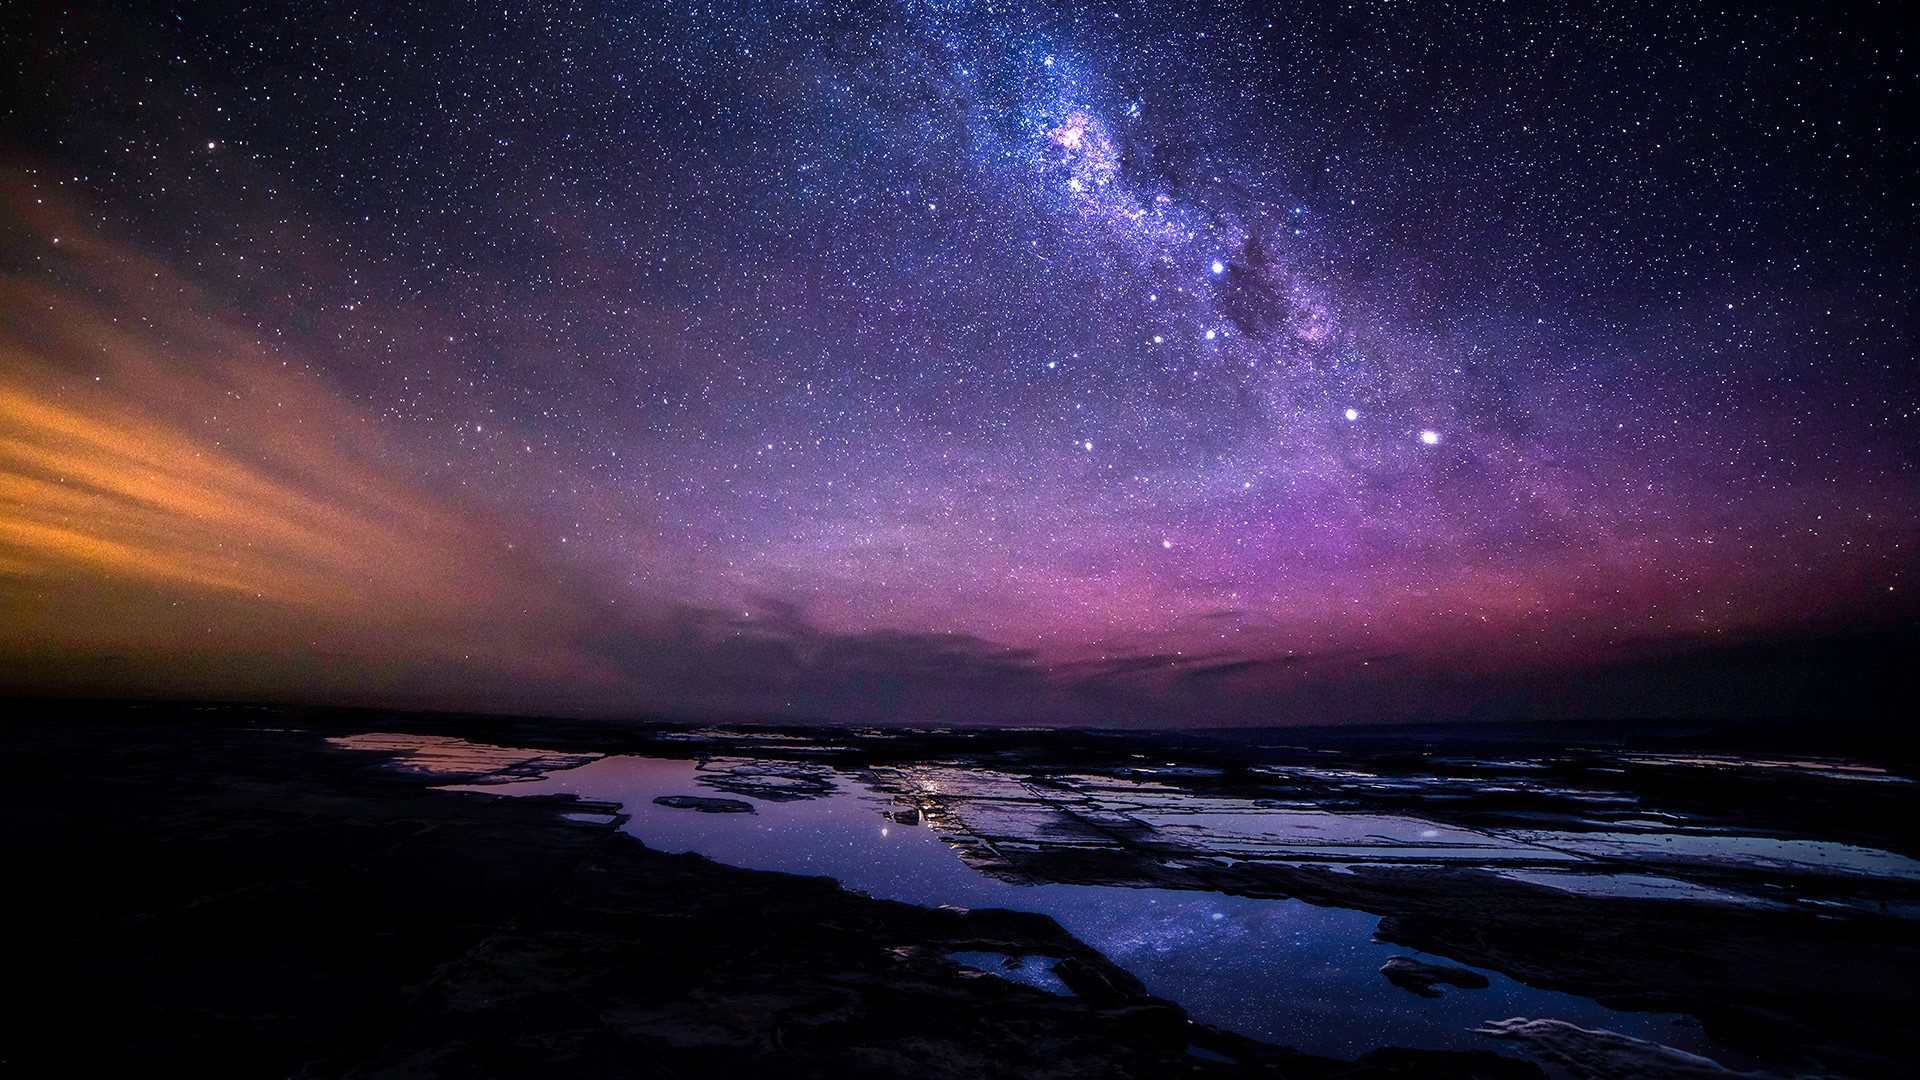 General 1920x1080 nature landscape night stars galaxy water horizon rocks reflection Milky Way Australia lake